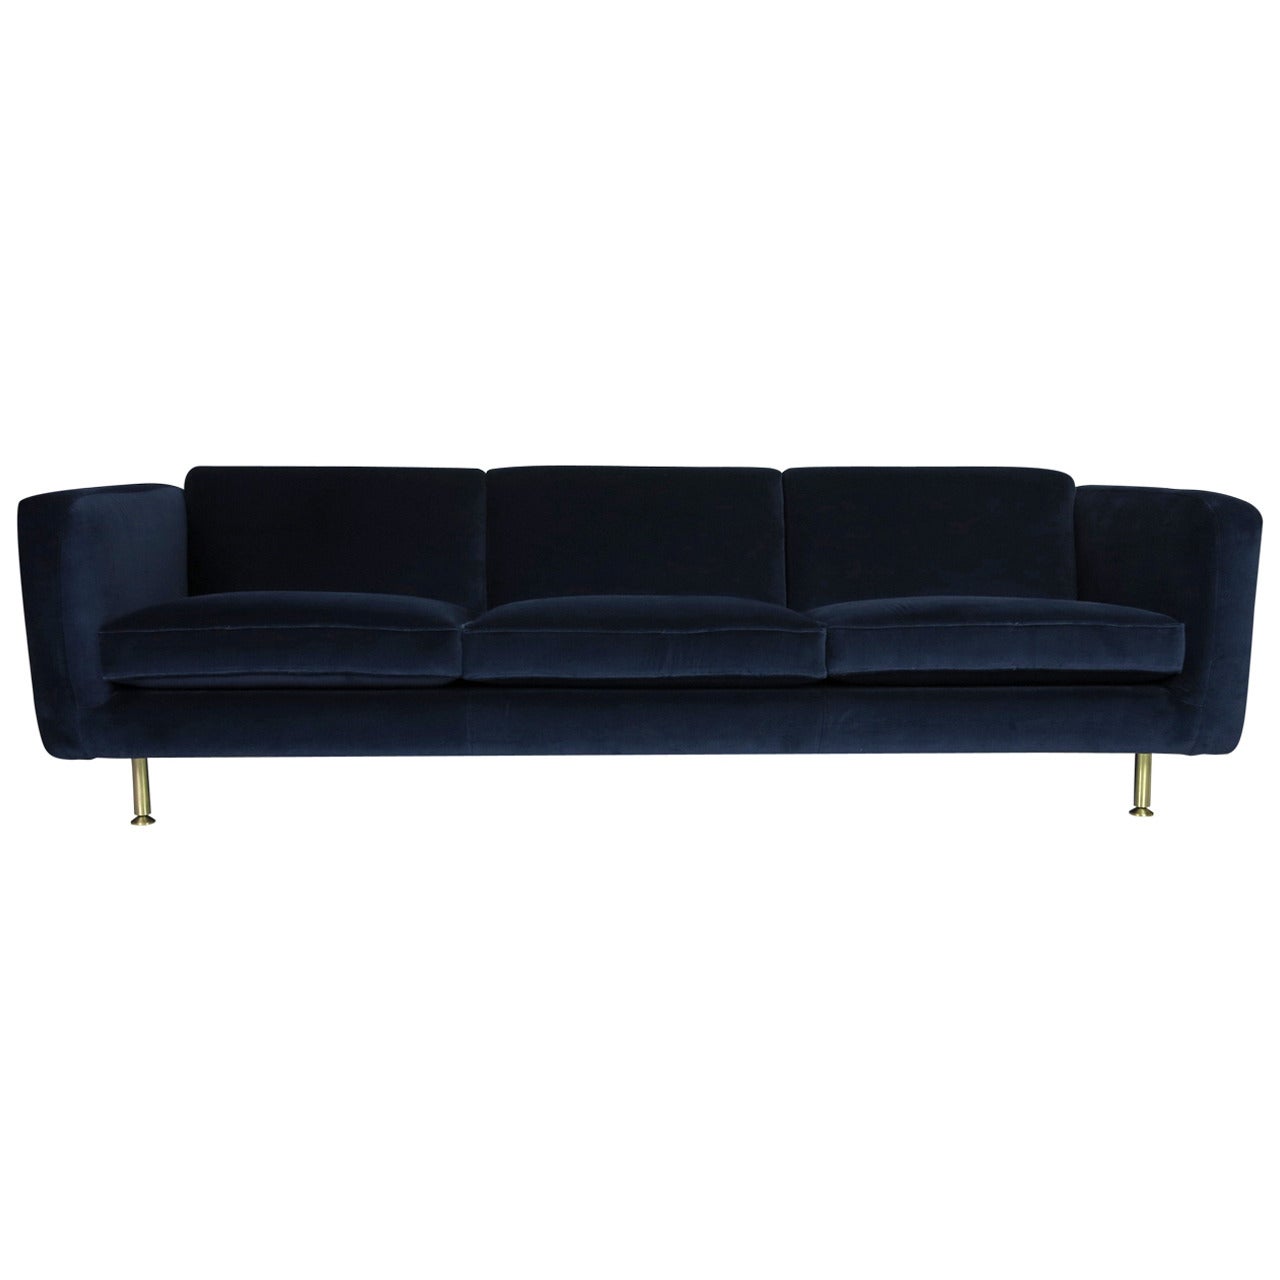 Sleek Three Seat Sofa by Rodolfo Dordoni for Minotti